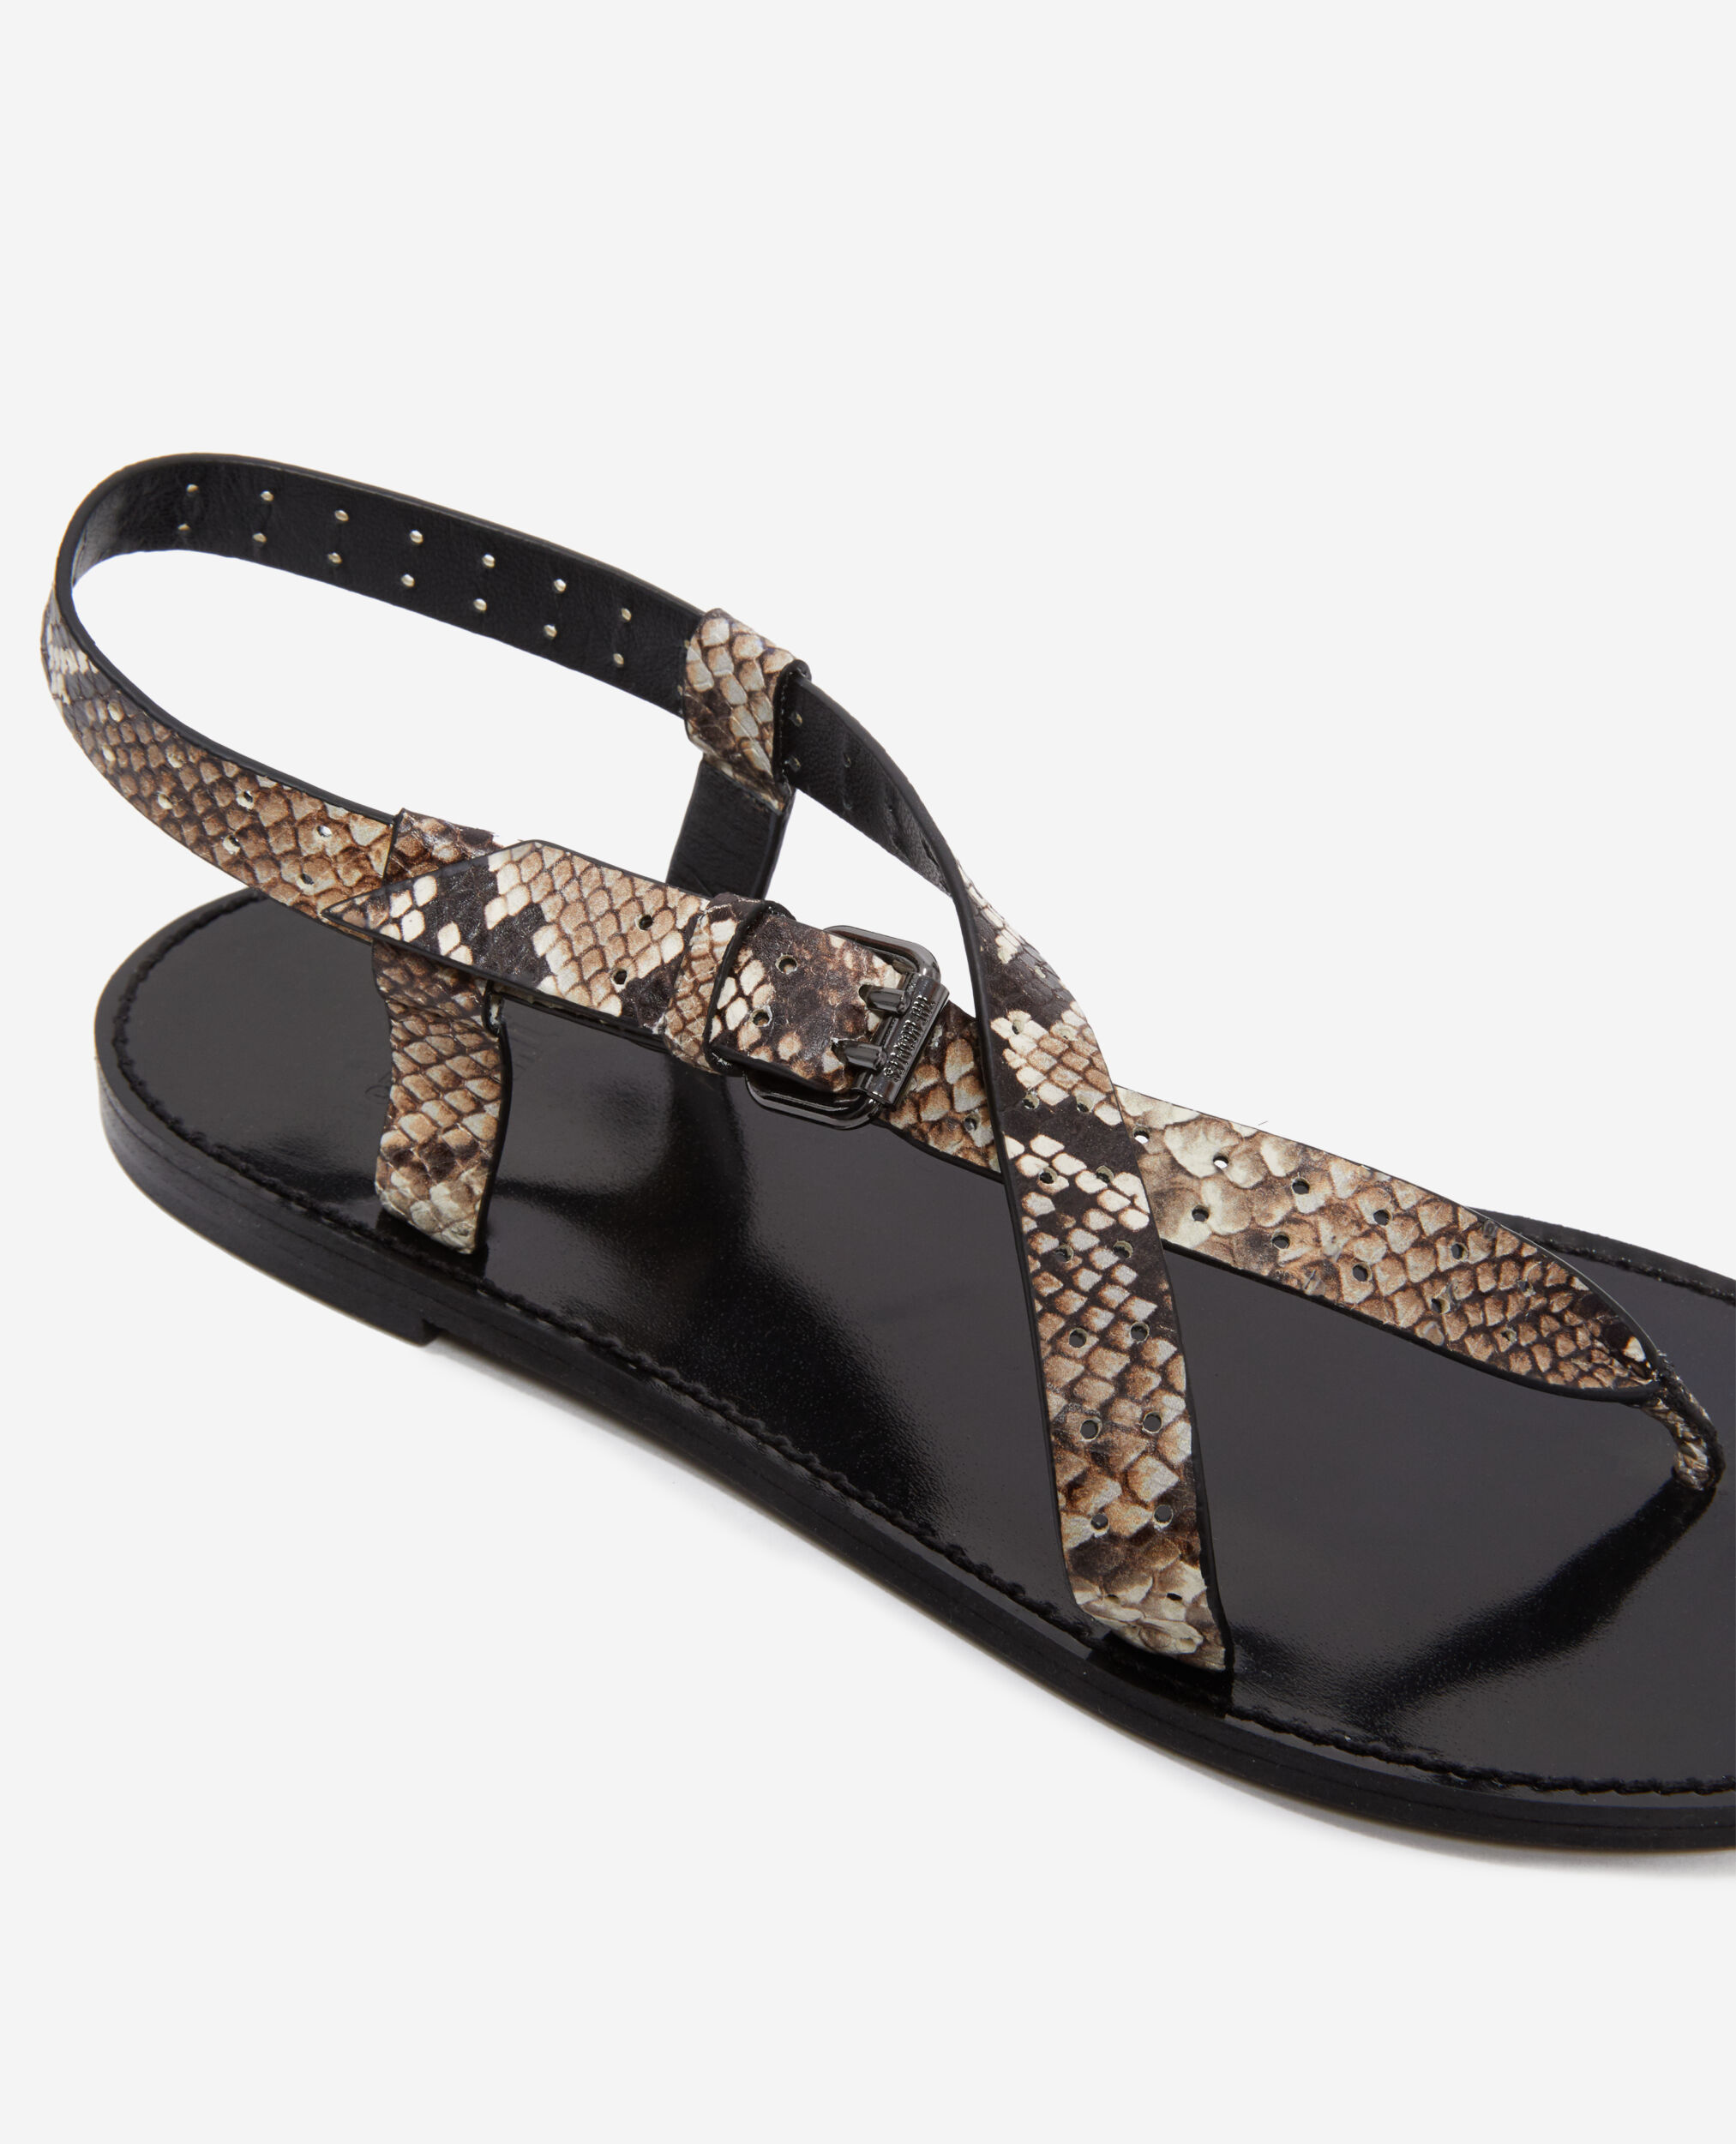 Snakeskin-effect flat leather sandals, BEIGE-BROWN, hi-res image number null